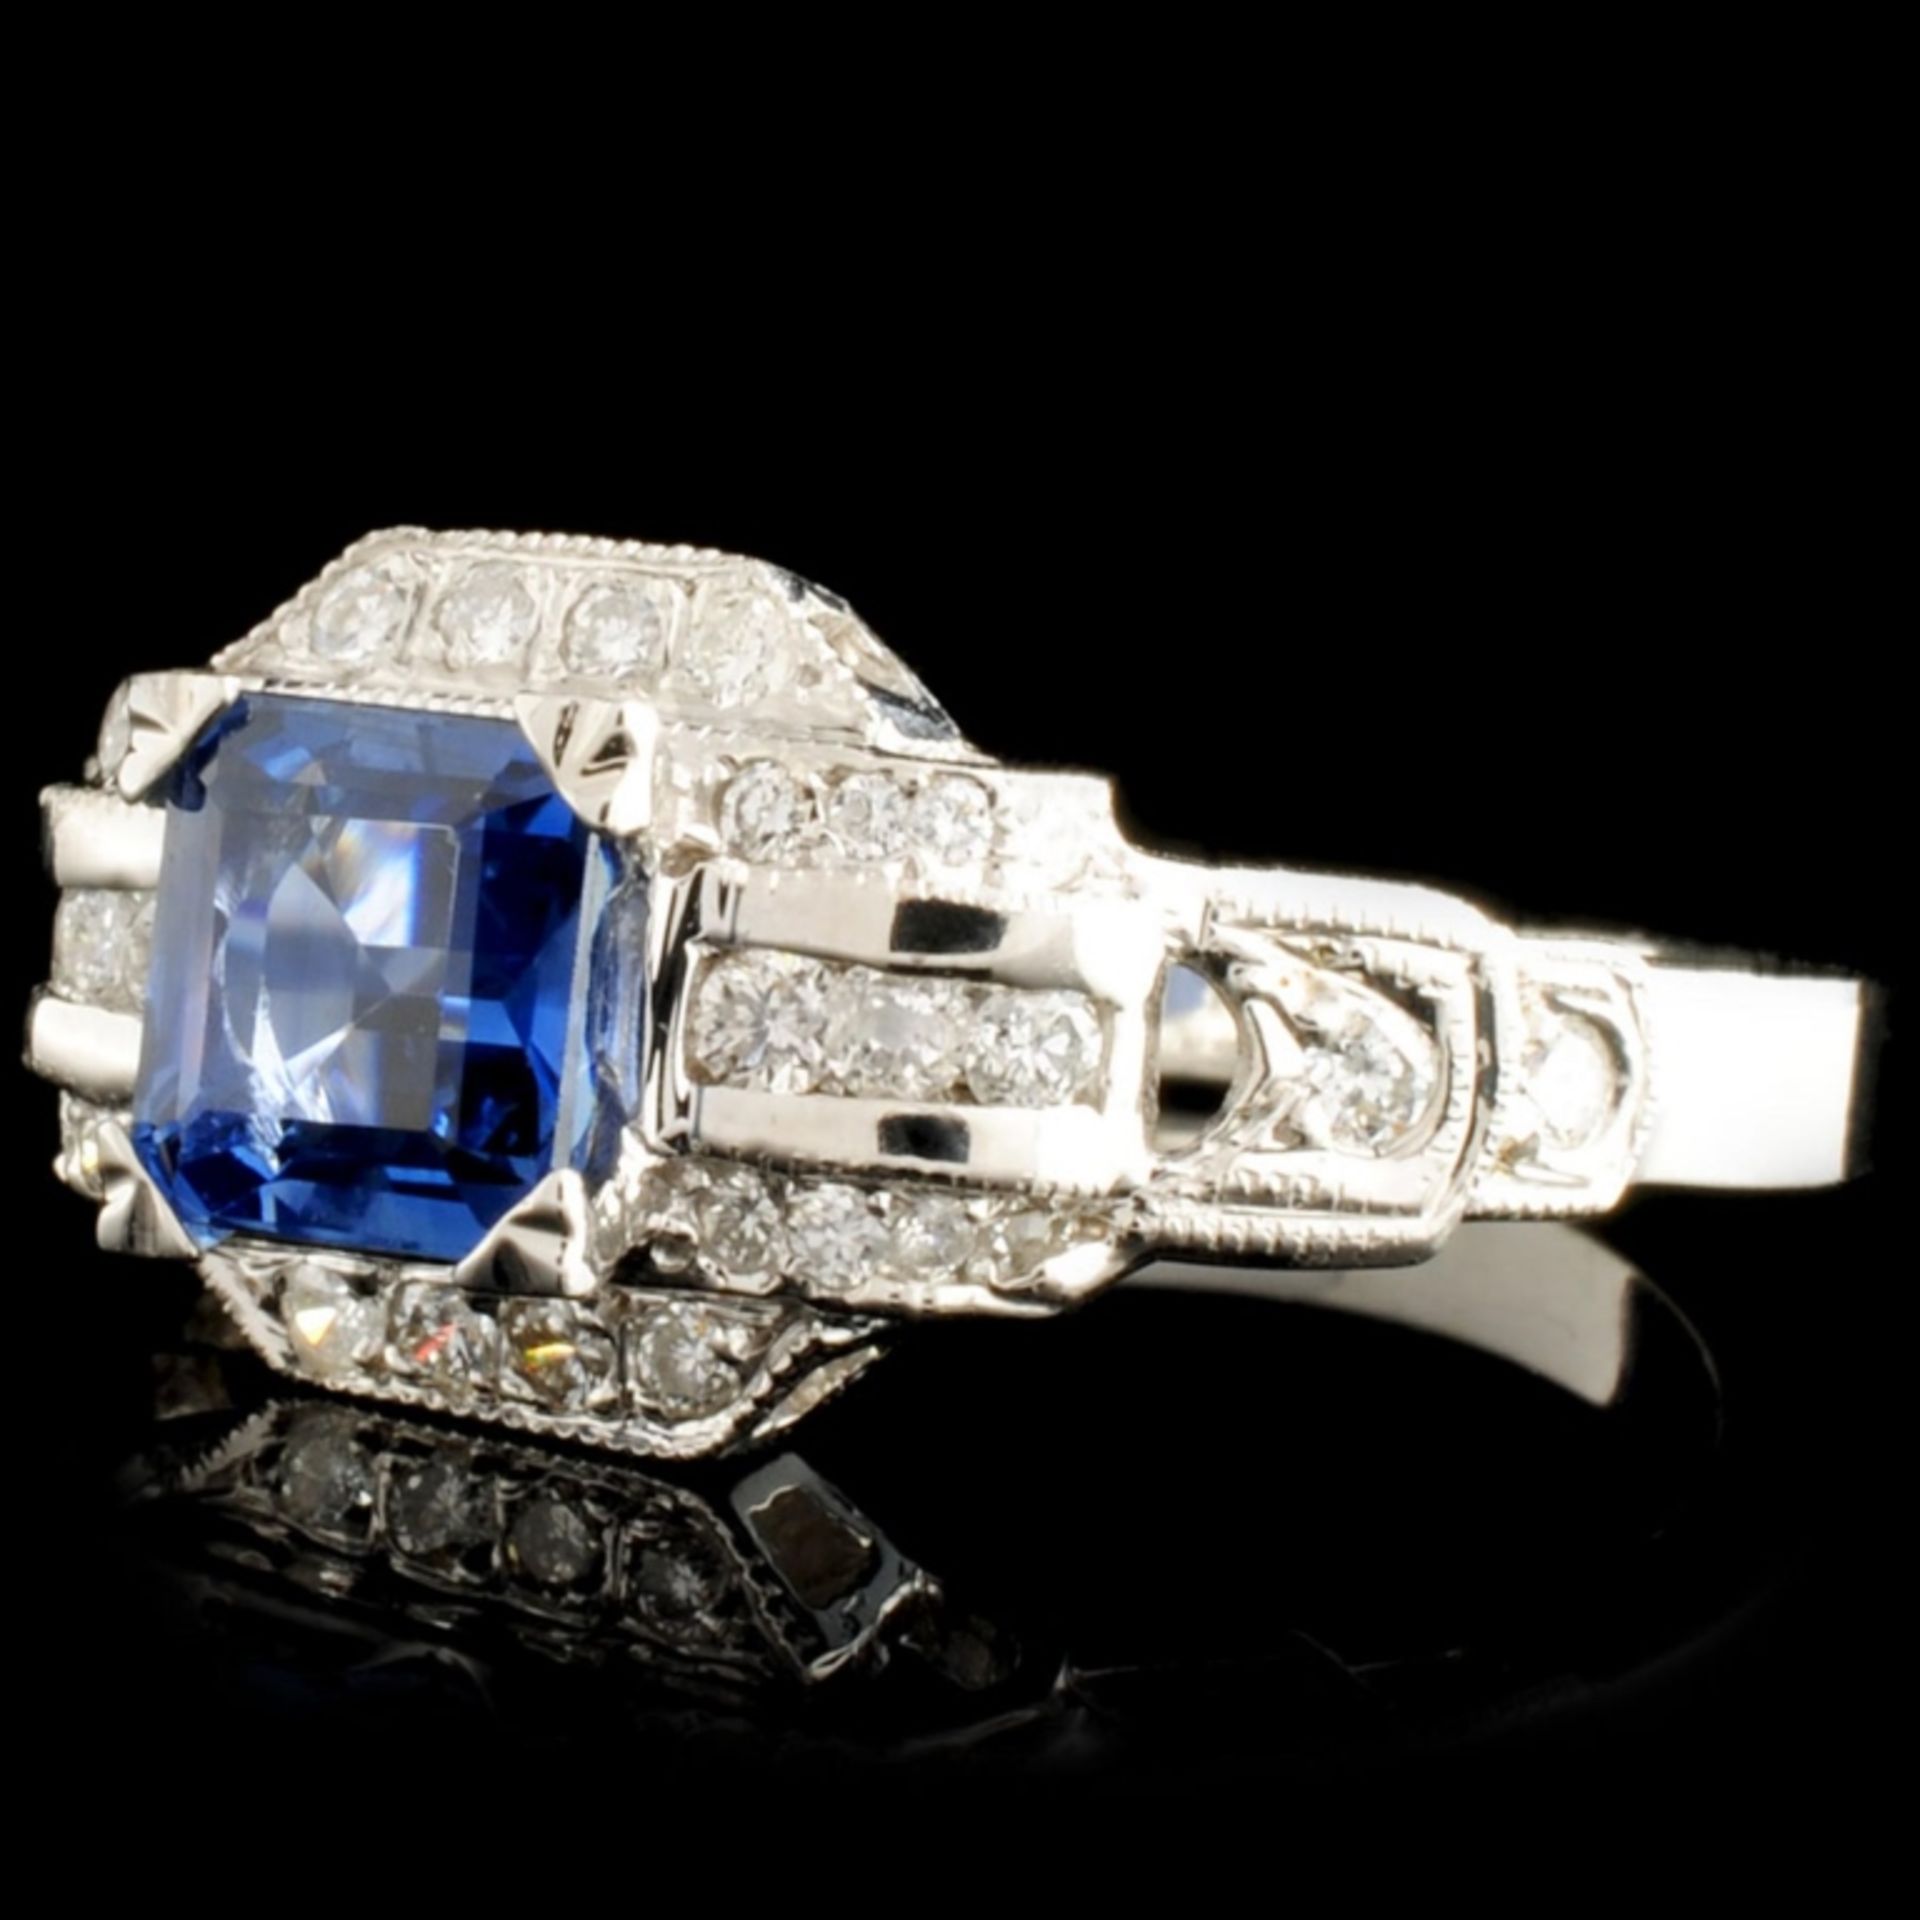 14K Gold 1.12ct Sapphire & 0.54ctw Diamond Ring - Image 2 of 5